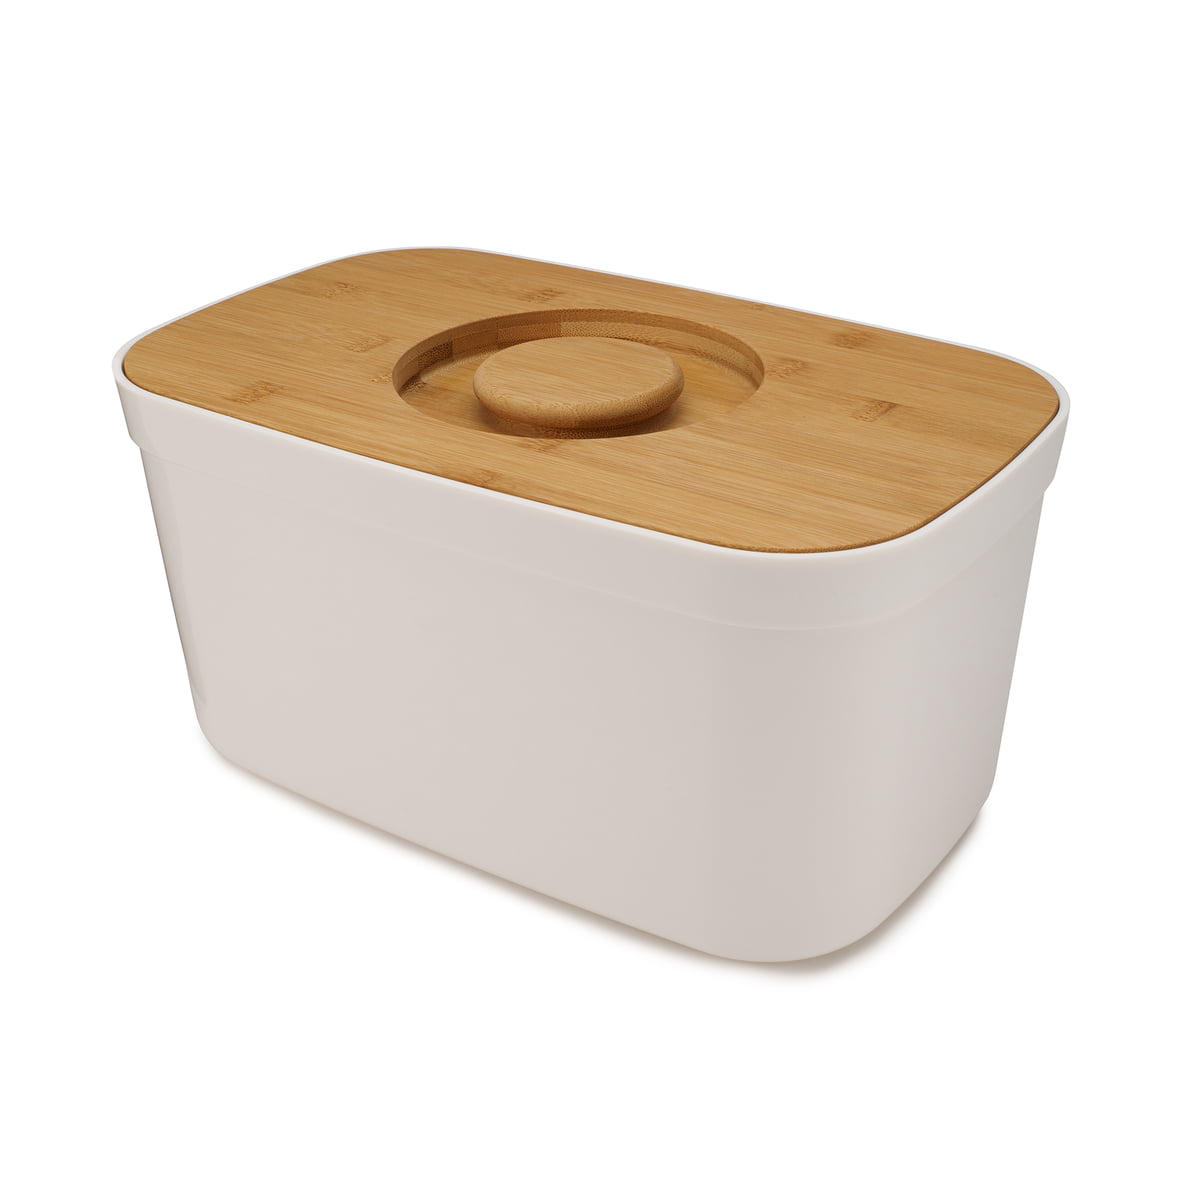 Joseph Joseph - Bread Bin bread basket with cutting board lid | Connox